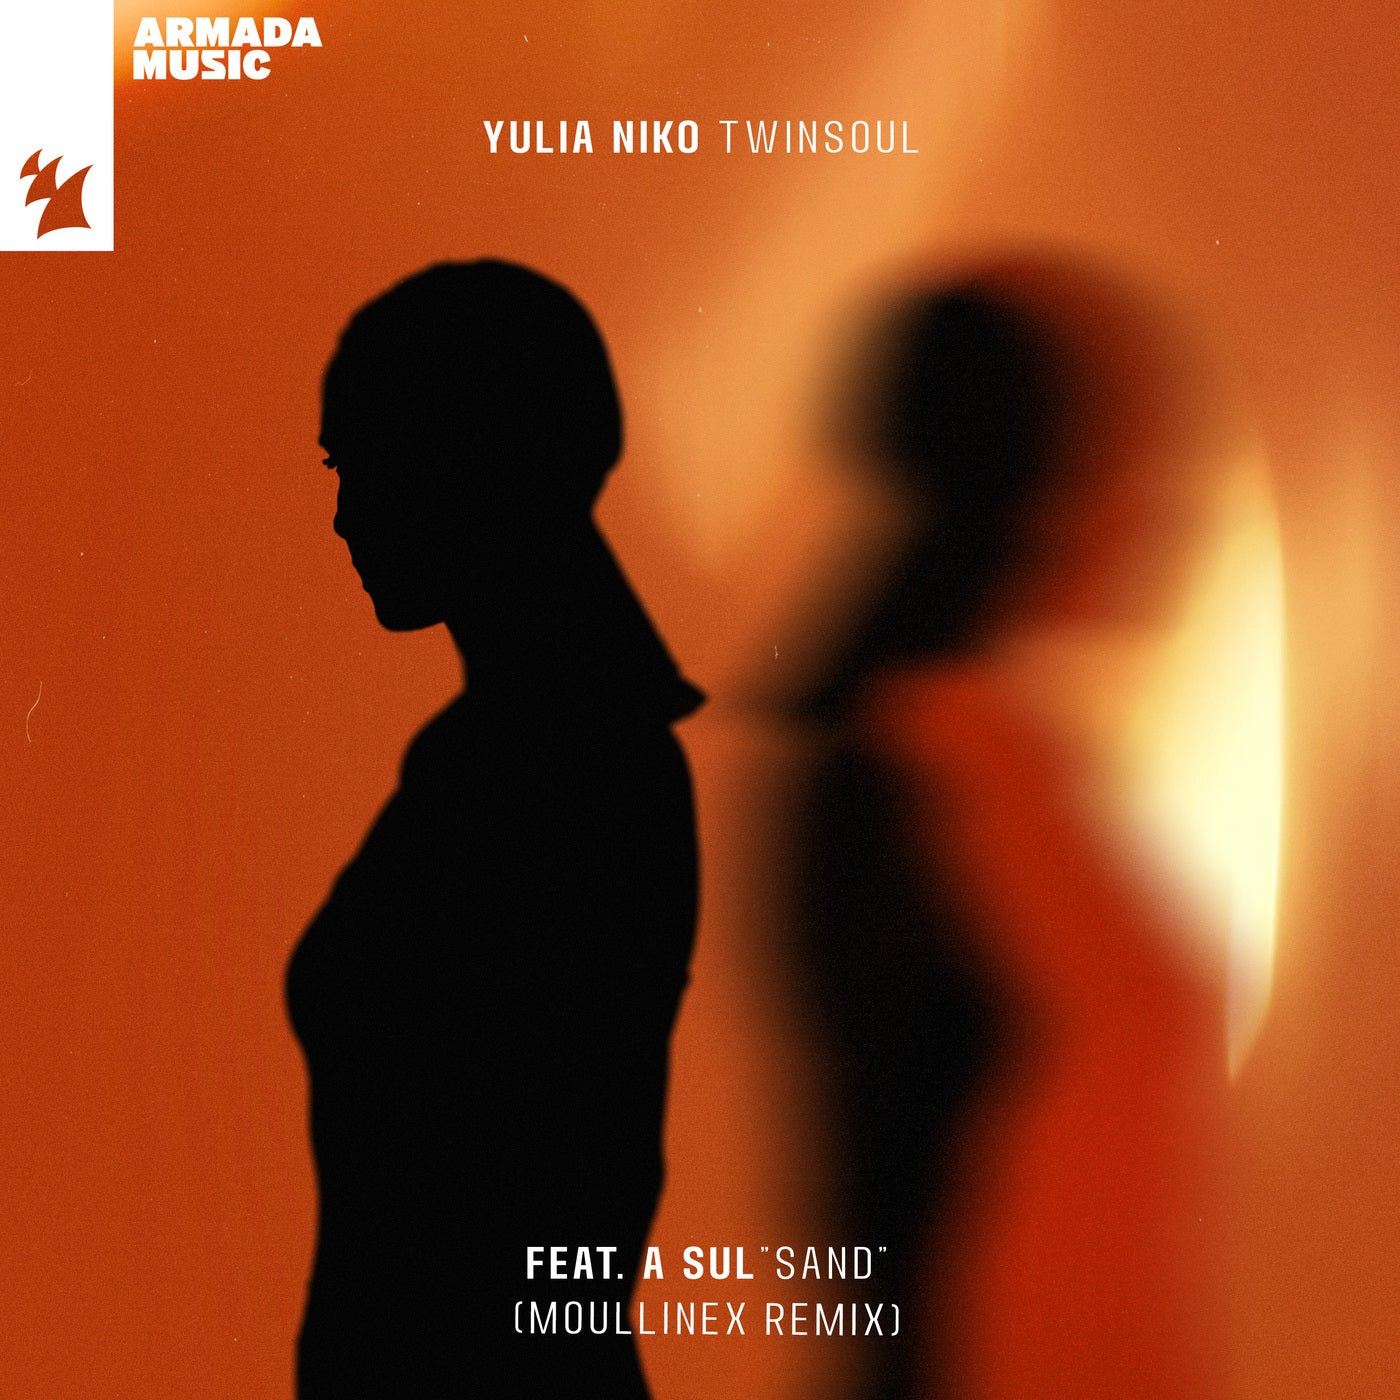 image cover: Yulia Niko, A Sul - Sand - Moullinex Remix on Armada Music